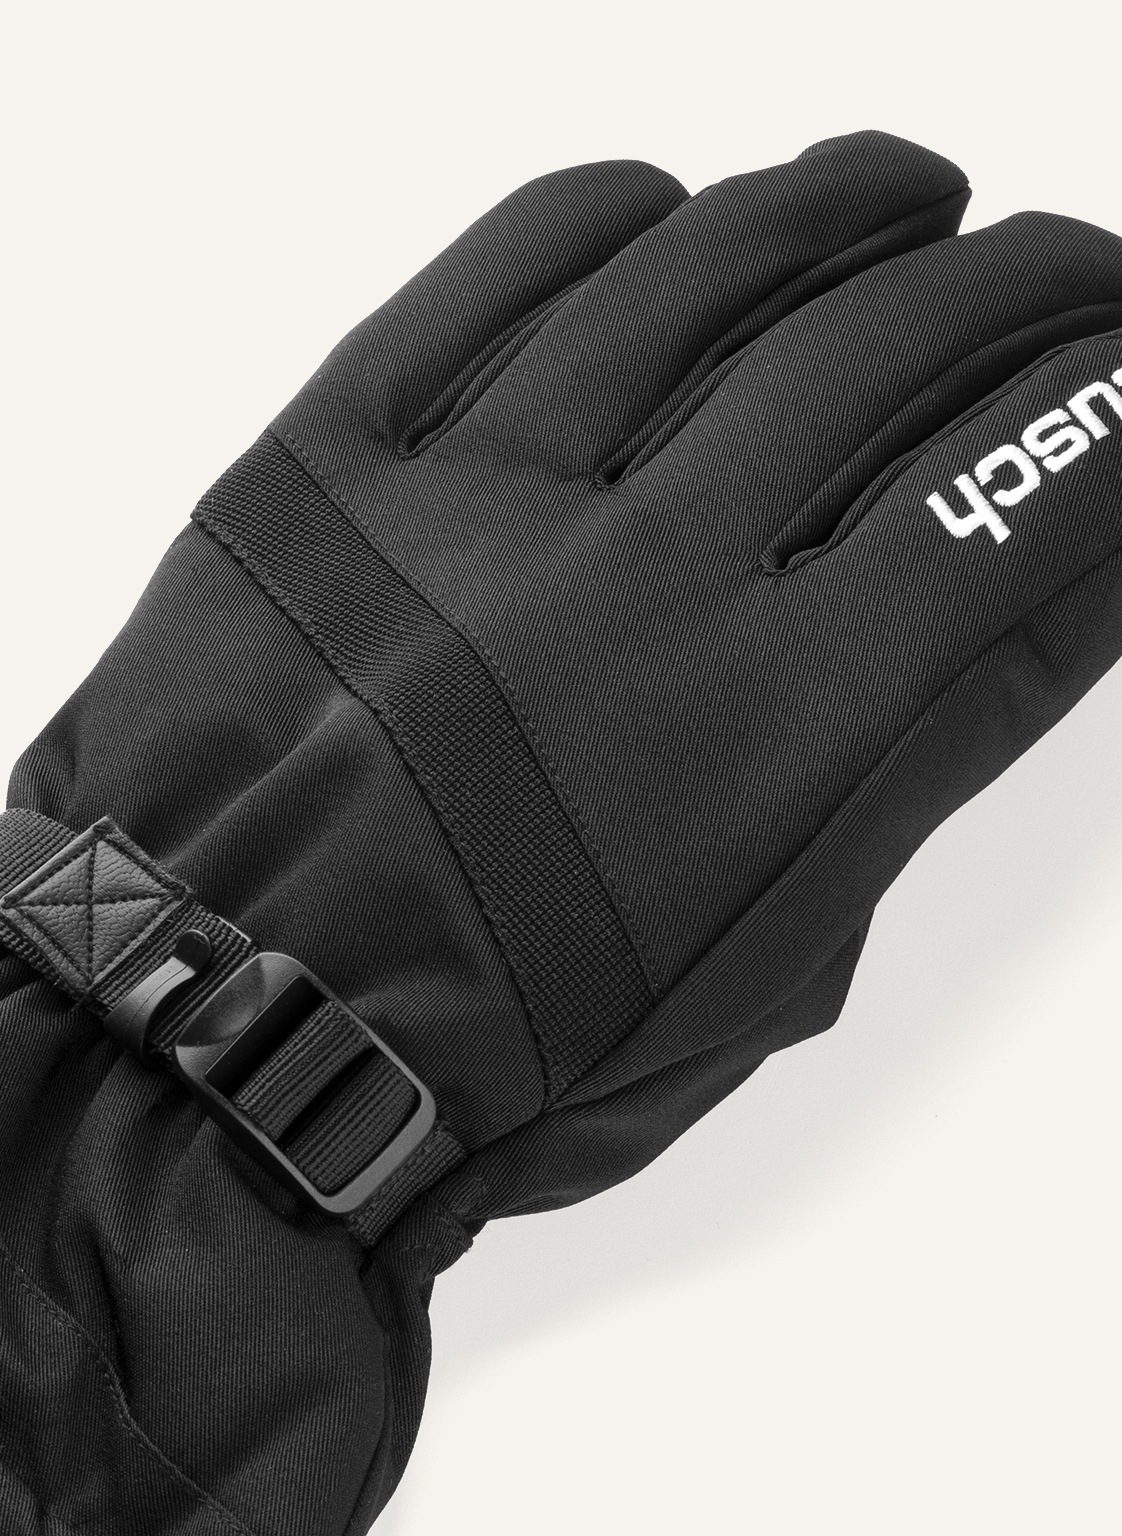 GORE-TEX«, Material und wasserdichtem BAUR Warm Rechnung Glove atmungsaktivem auf | Skihandschuhe bestellen aus Reusch »Winter